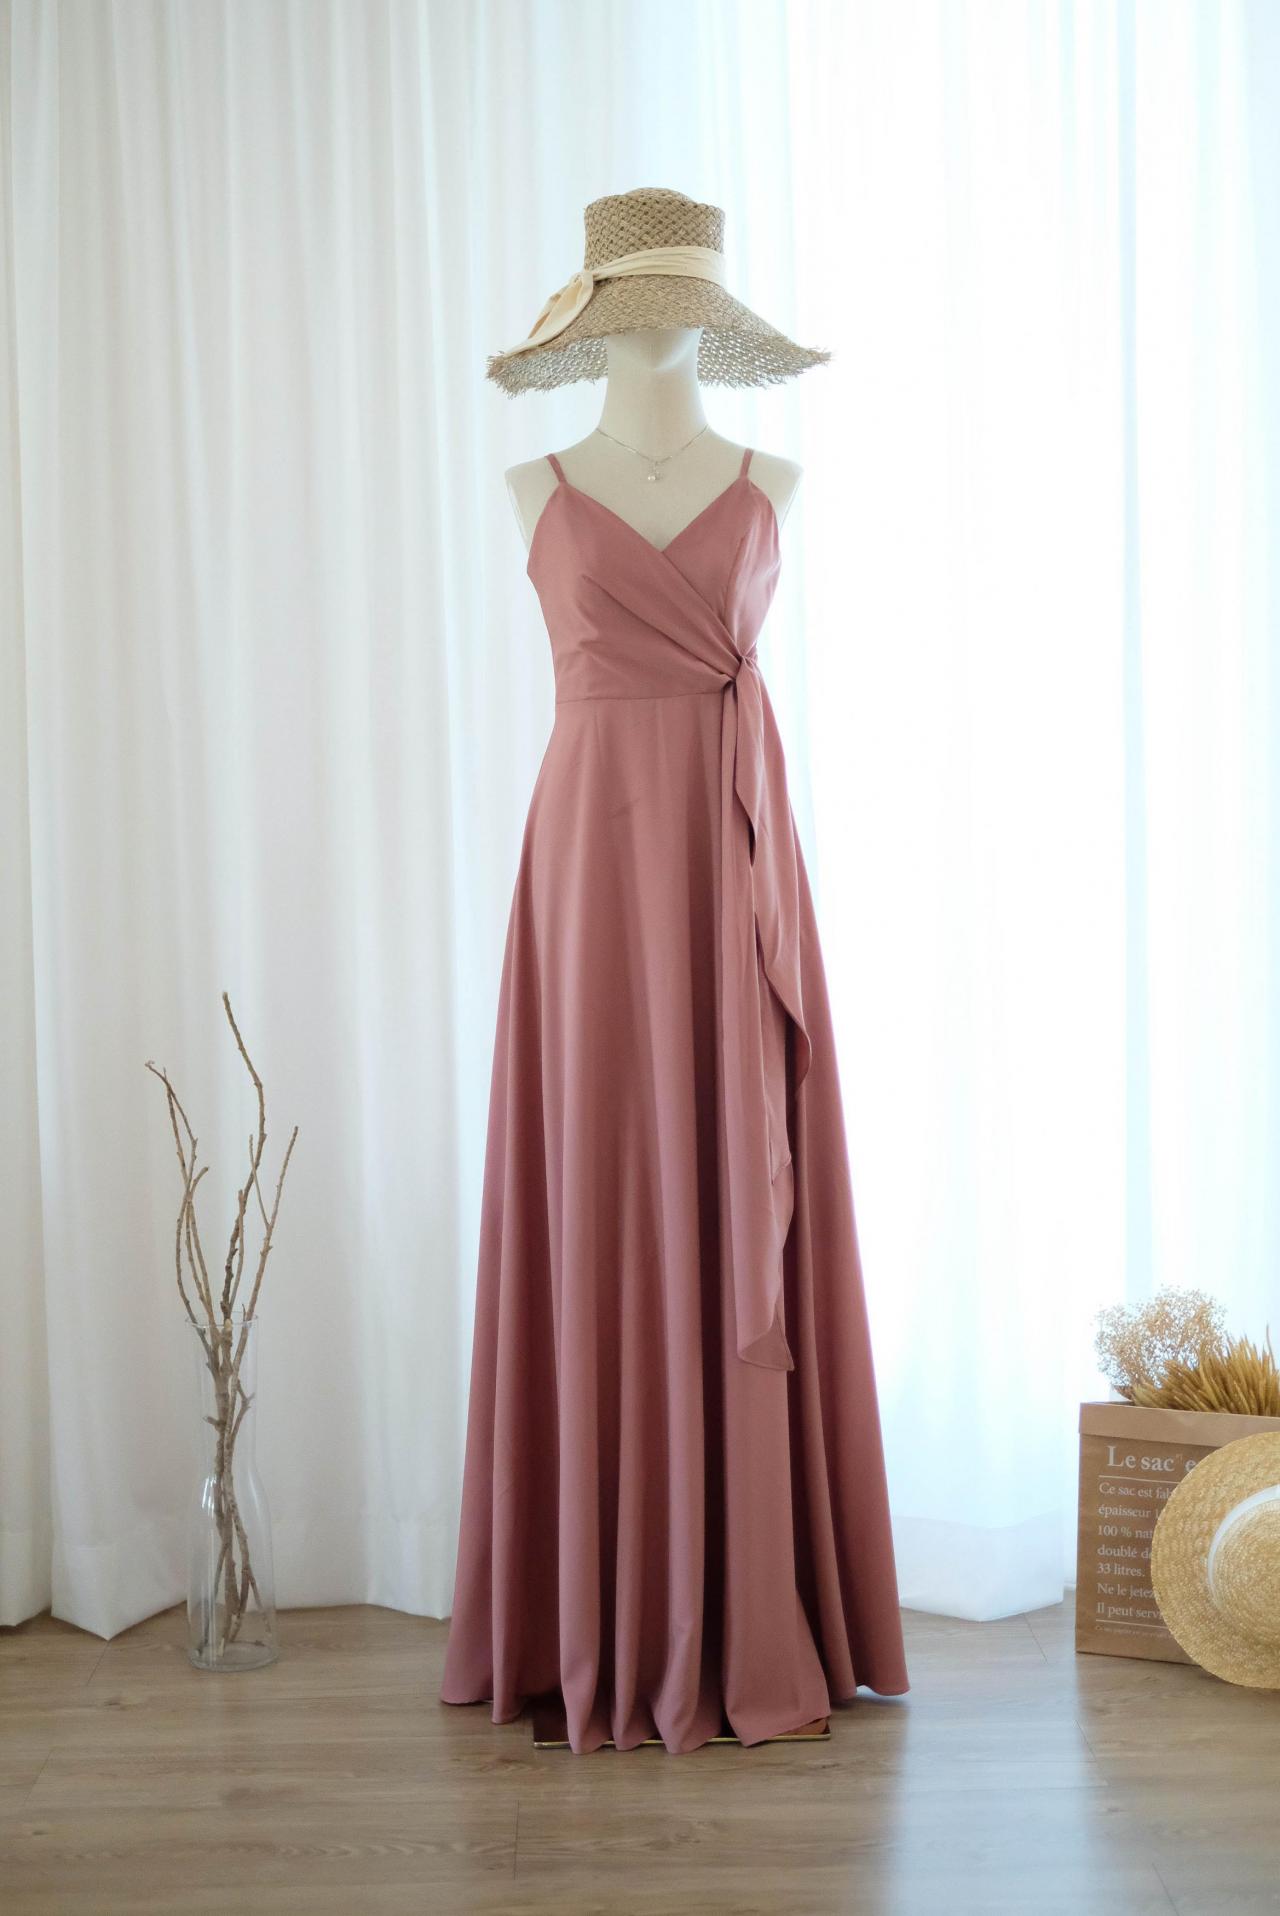 Linh English Rose Pink Bridesmaid Dress Bridal Dress Floor Length Cocktail Party Wedding Dresses